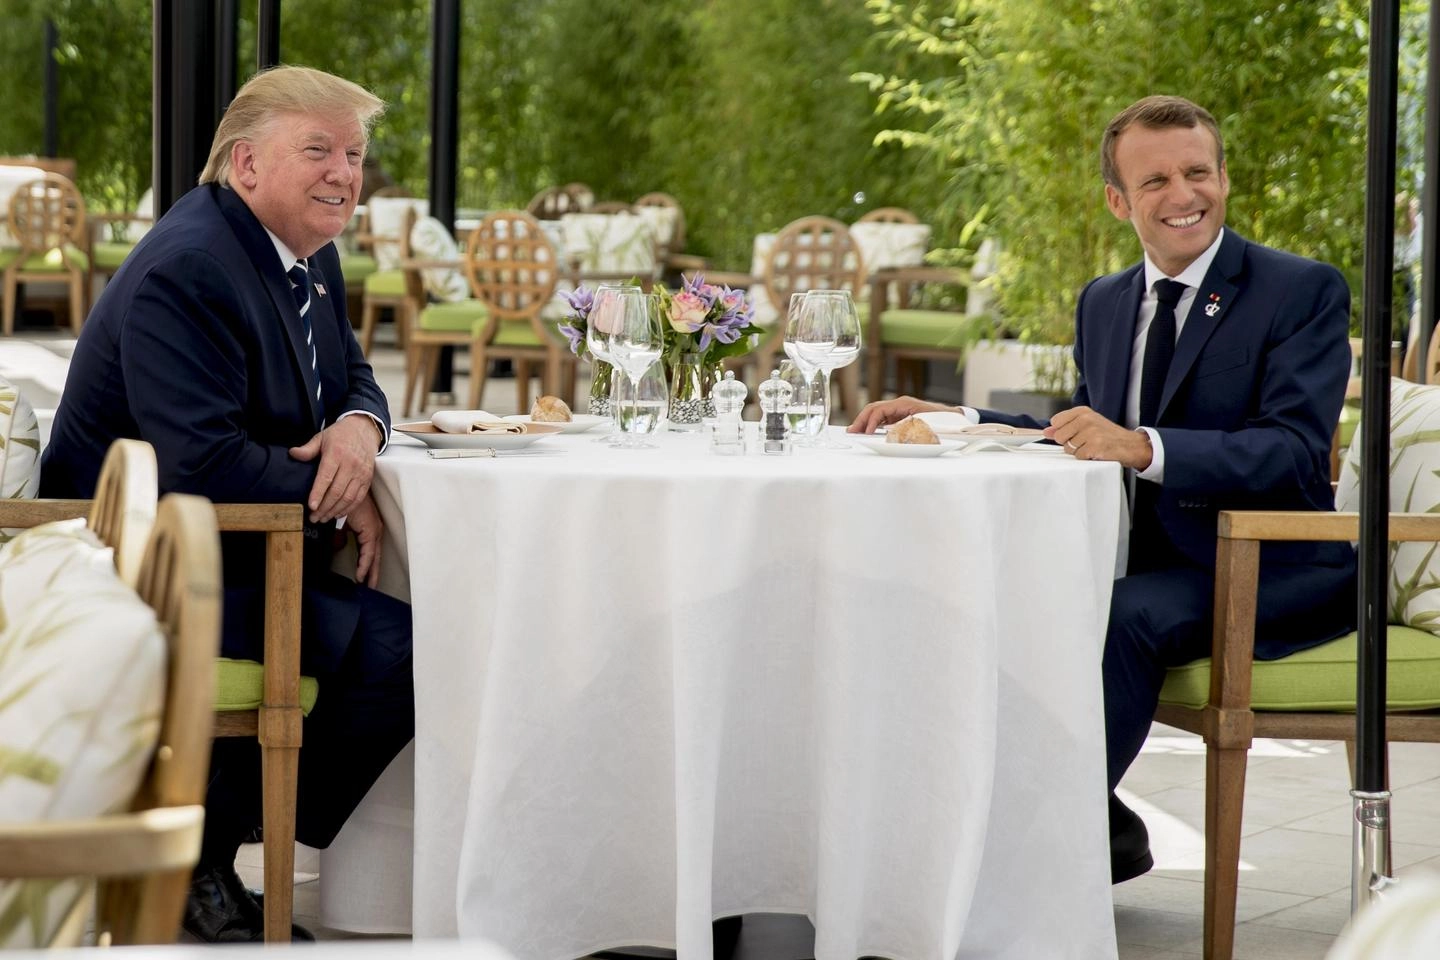 Trump e Macron insieme a tavola a pranzo (Ansa Ap)